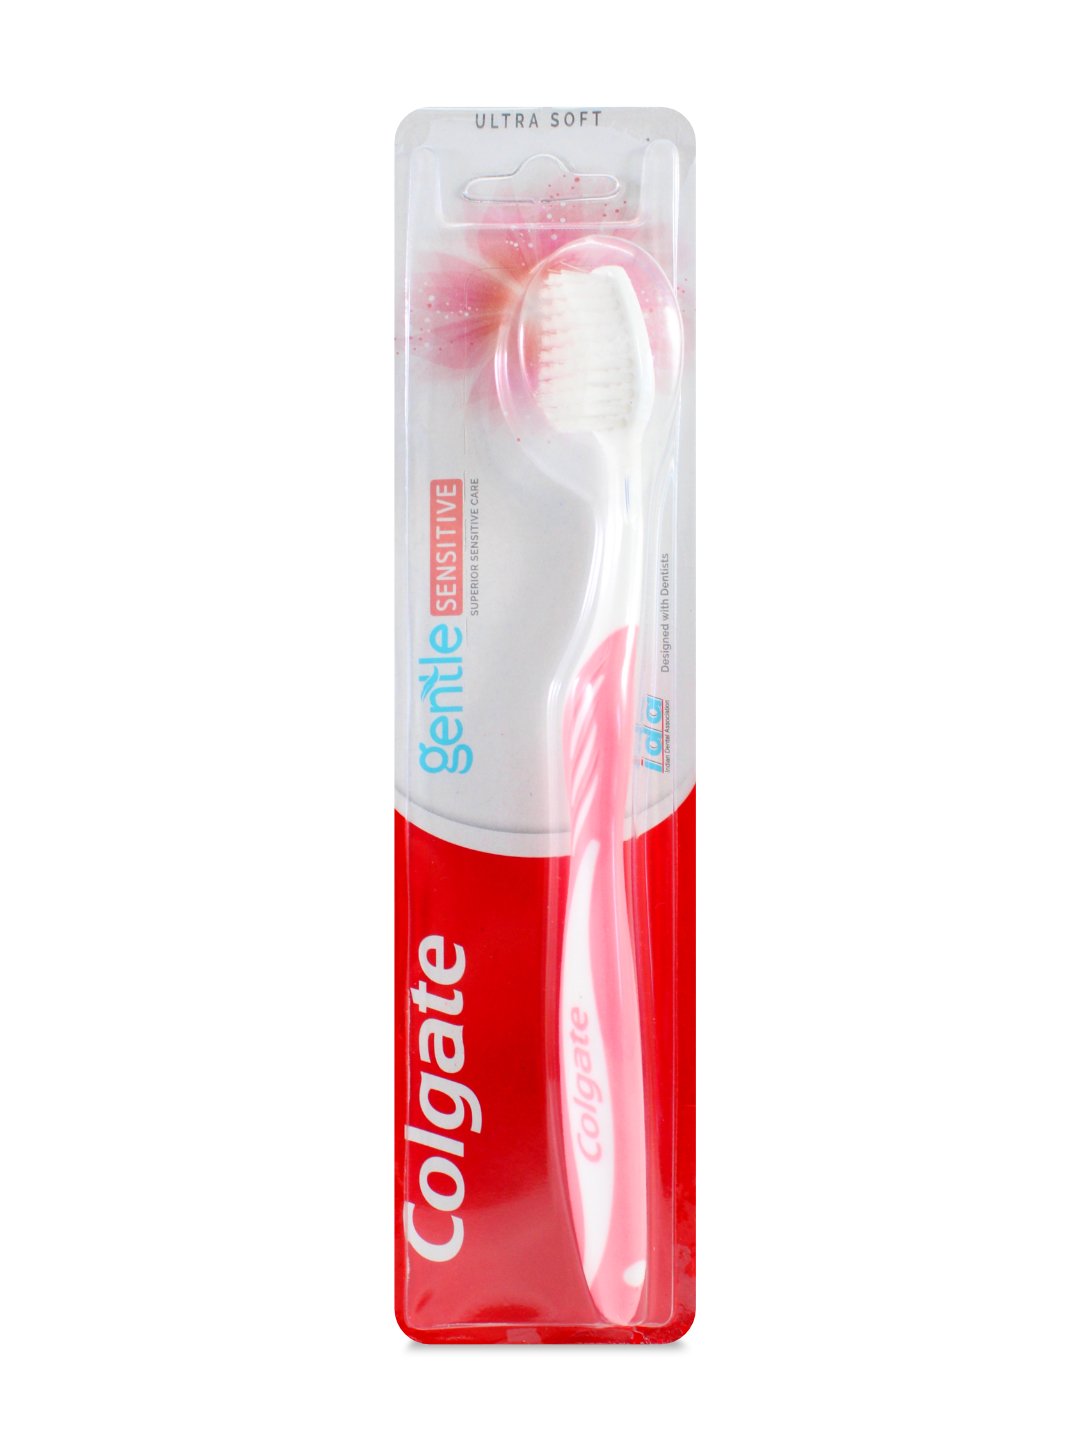 Colgate Gentle Sensitive (Ultra Soft)Toothbrush (1N)